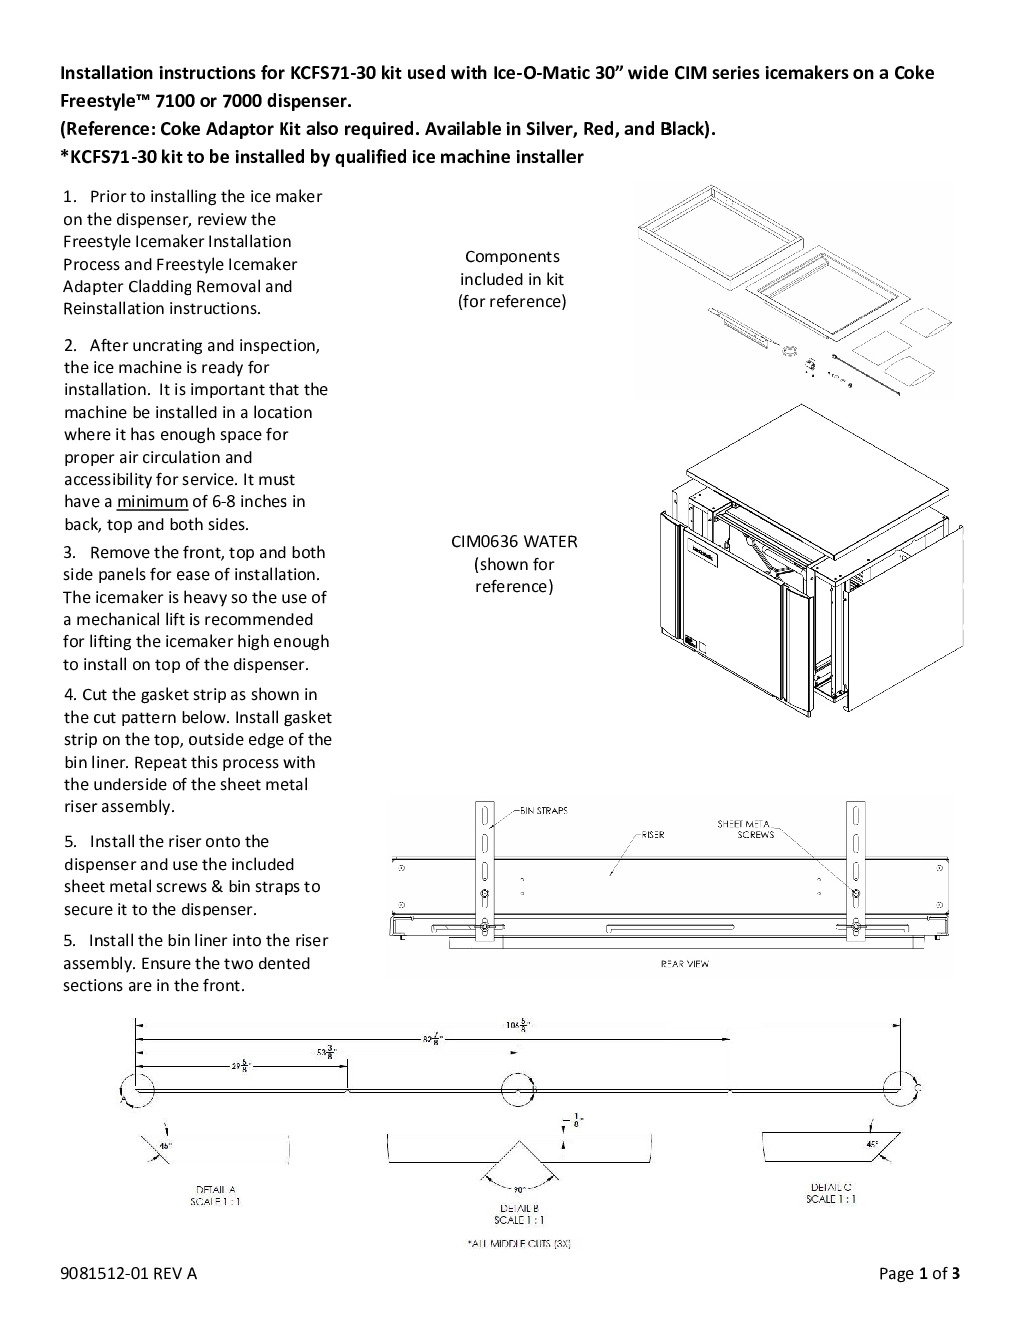 Ice-O-Matic KCFS71-30 Ice Control Kit